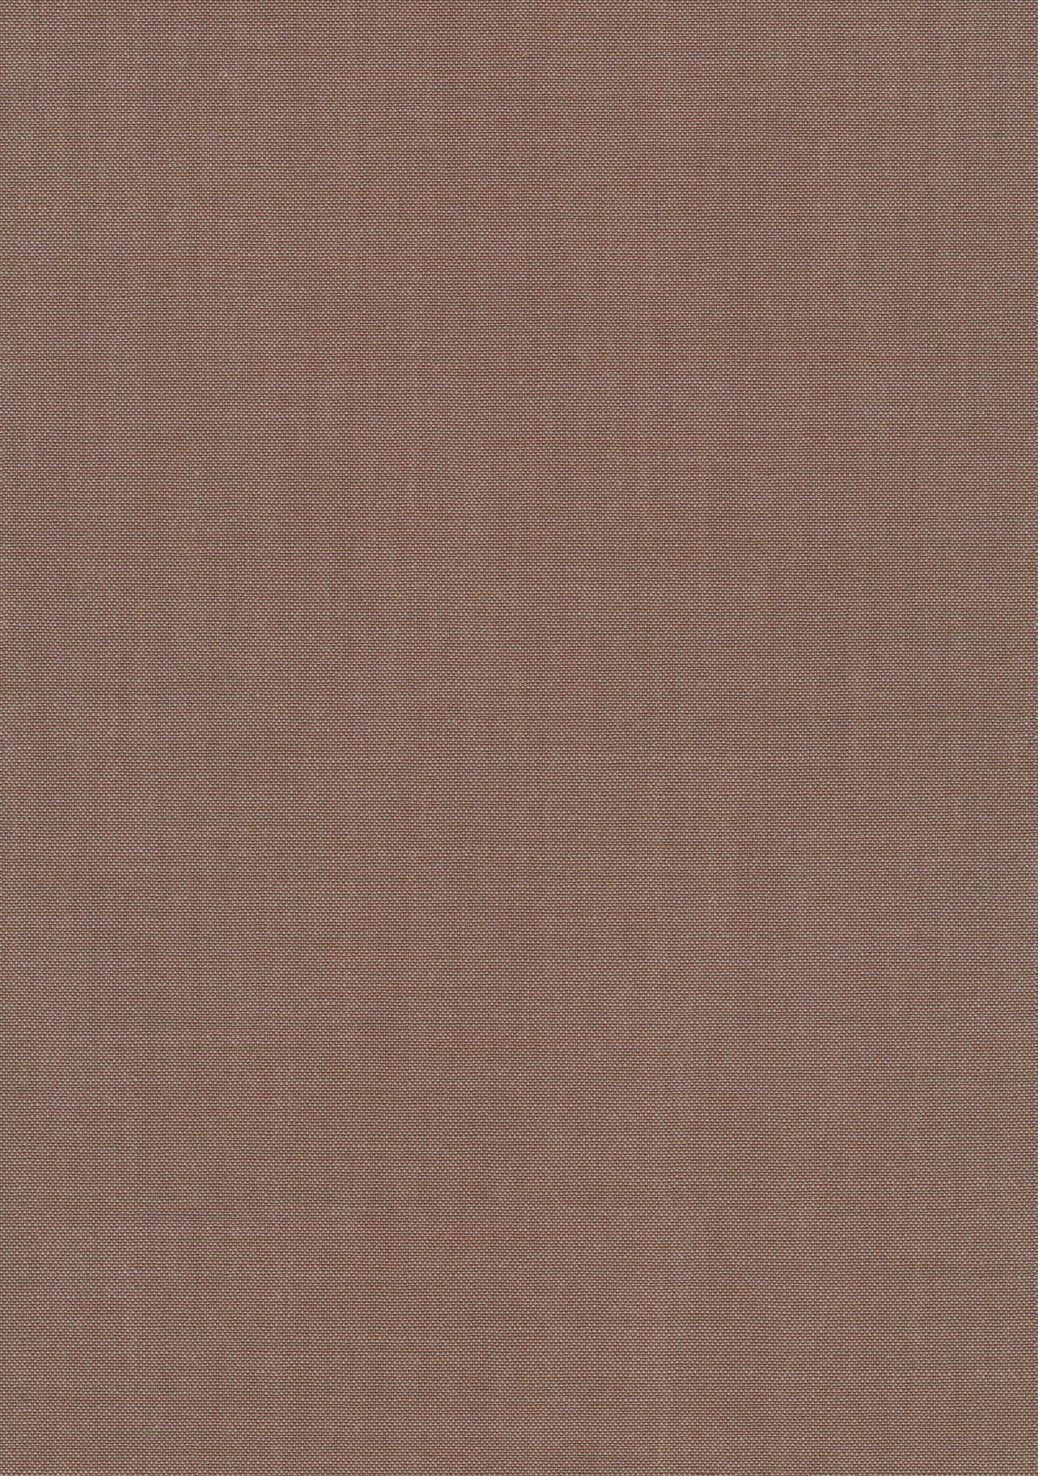 Fabric sample Remix 3 326 brown